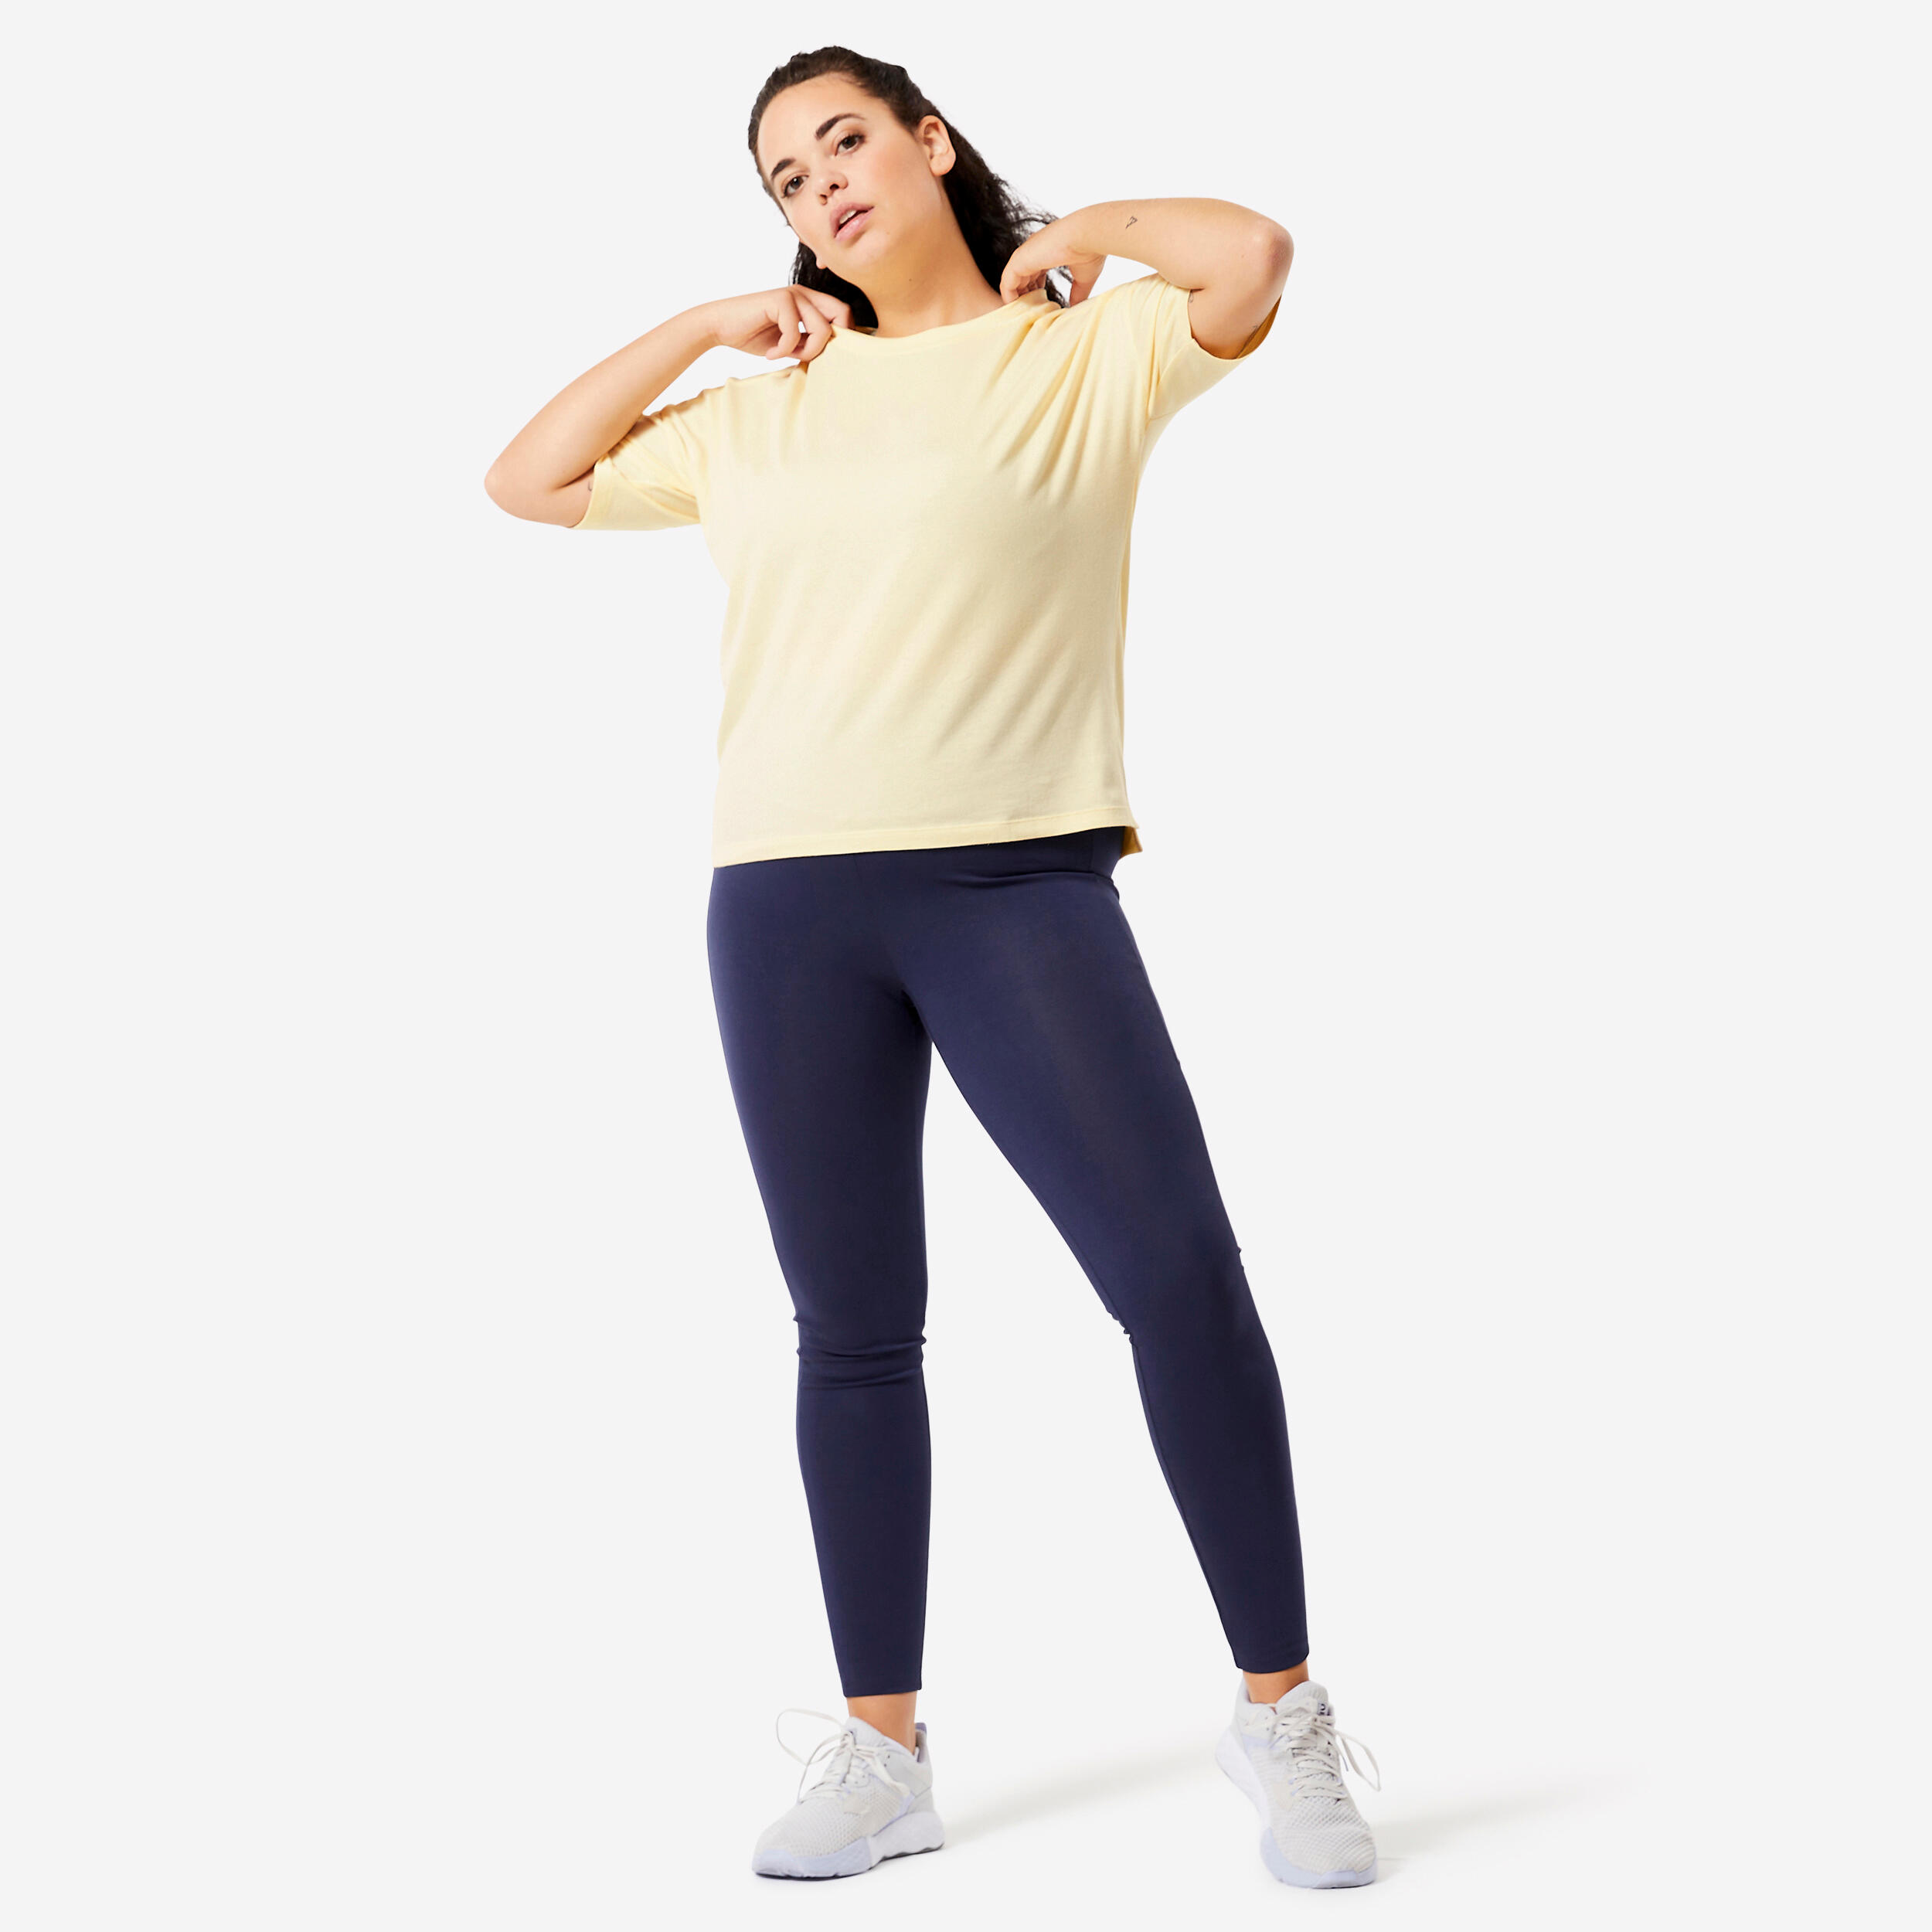 Women's Loose-Fit Fitness T-Shirt 520 - Vanilla 2/5